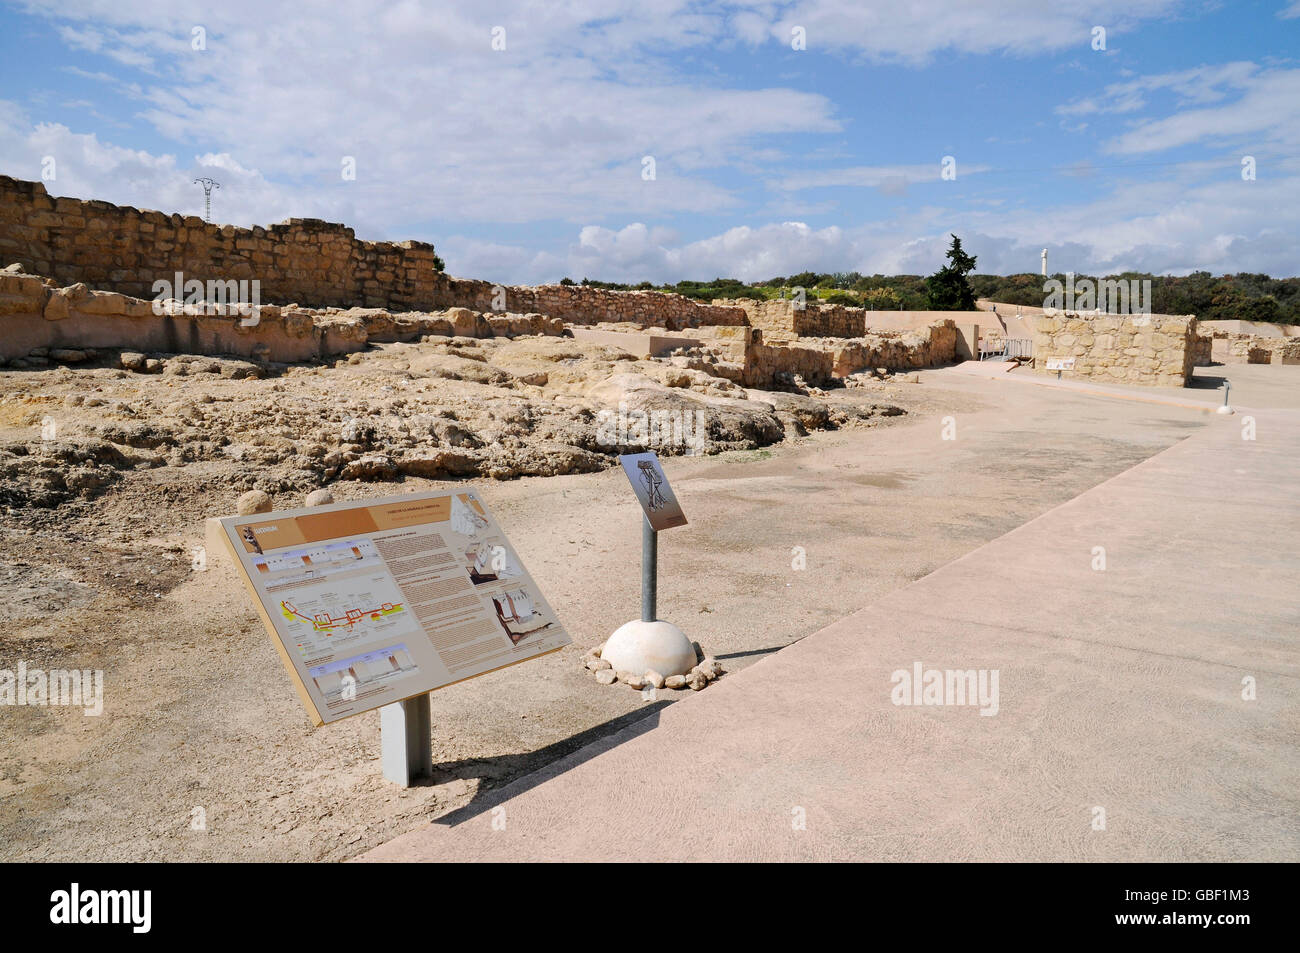 Yacimiento Arqueologico Lucentum, archaeological roman excavation site, Lucentum, La Albufereta, Alicante, Costa Blanca, Province of Alicante, Spain, Europe Stock Photo